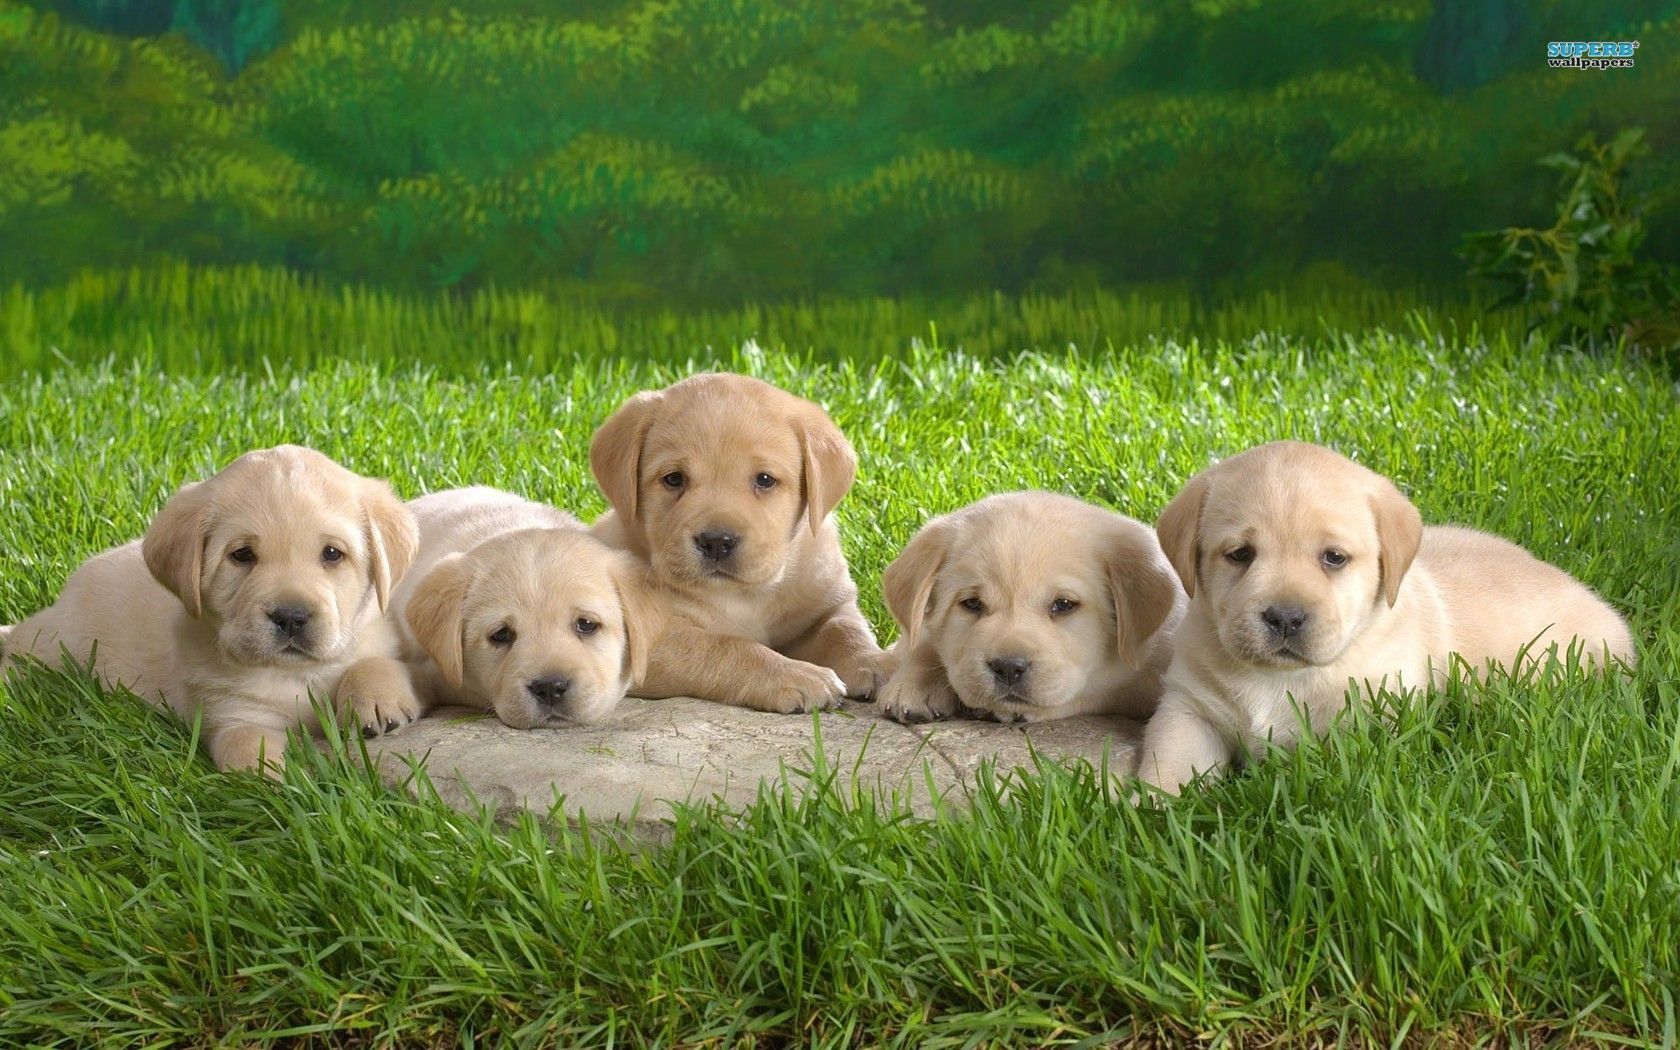 Labrador Puppies wallpaper - Animal wallpapers - #9728